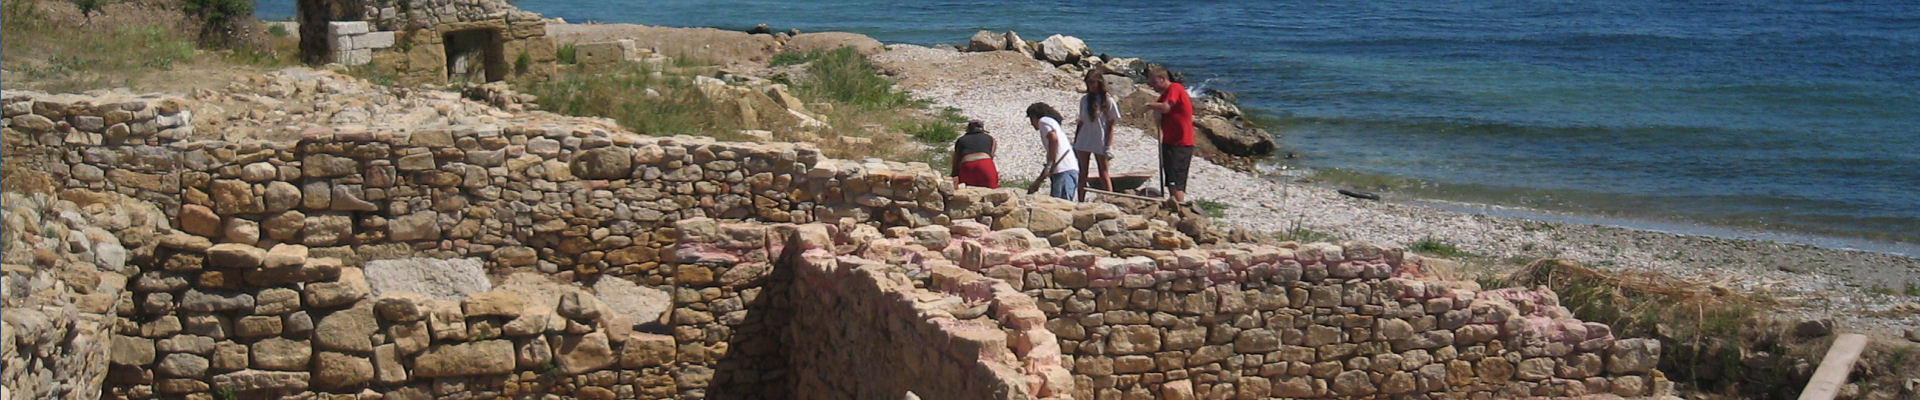 archaeological site of tholon - Etang de Berre - martigues